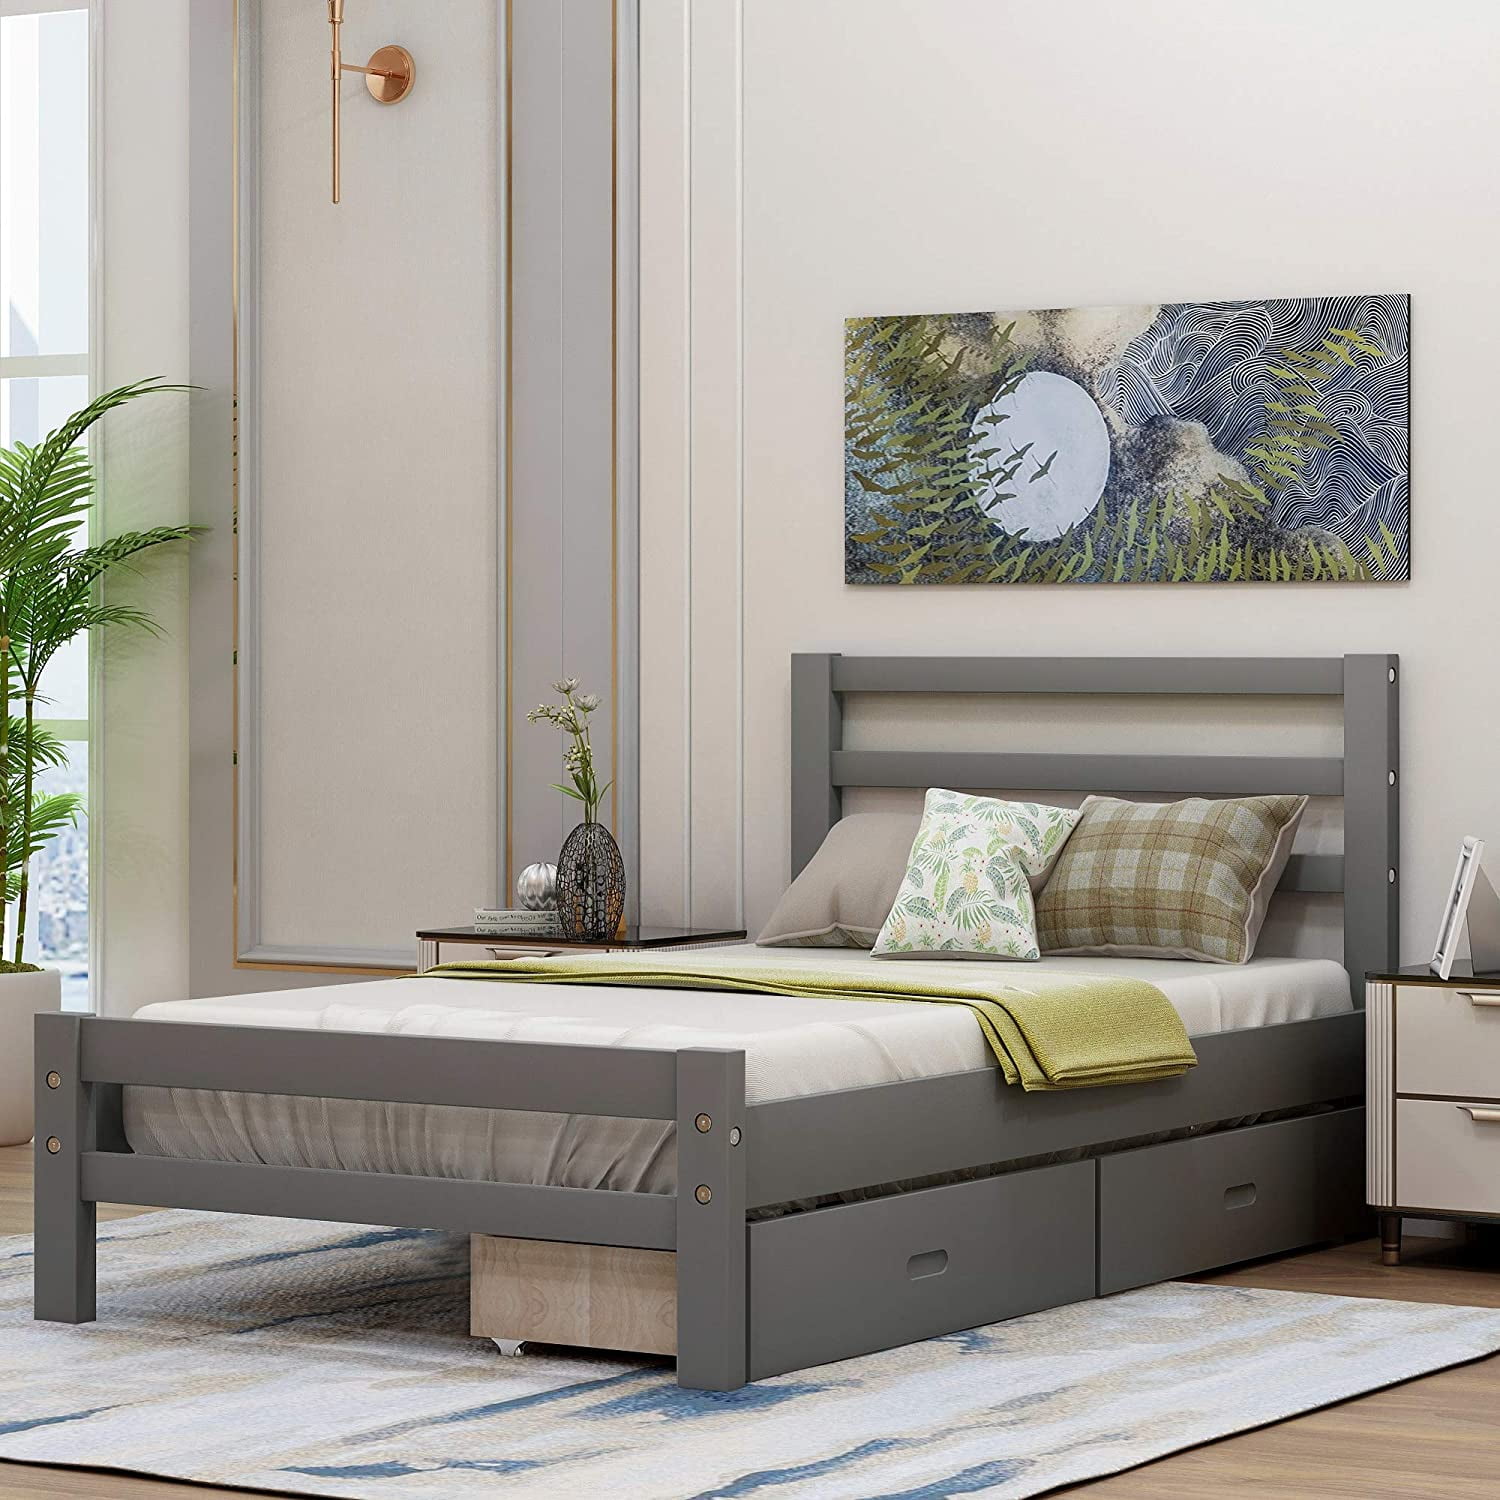 Details about  / Platform Bed With Drawers Wooden Slats Wood Bed Frame Home Furniture